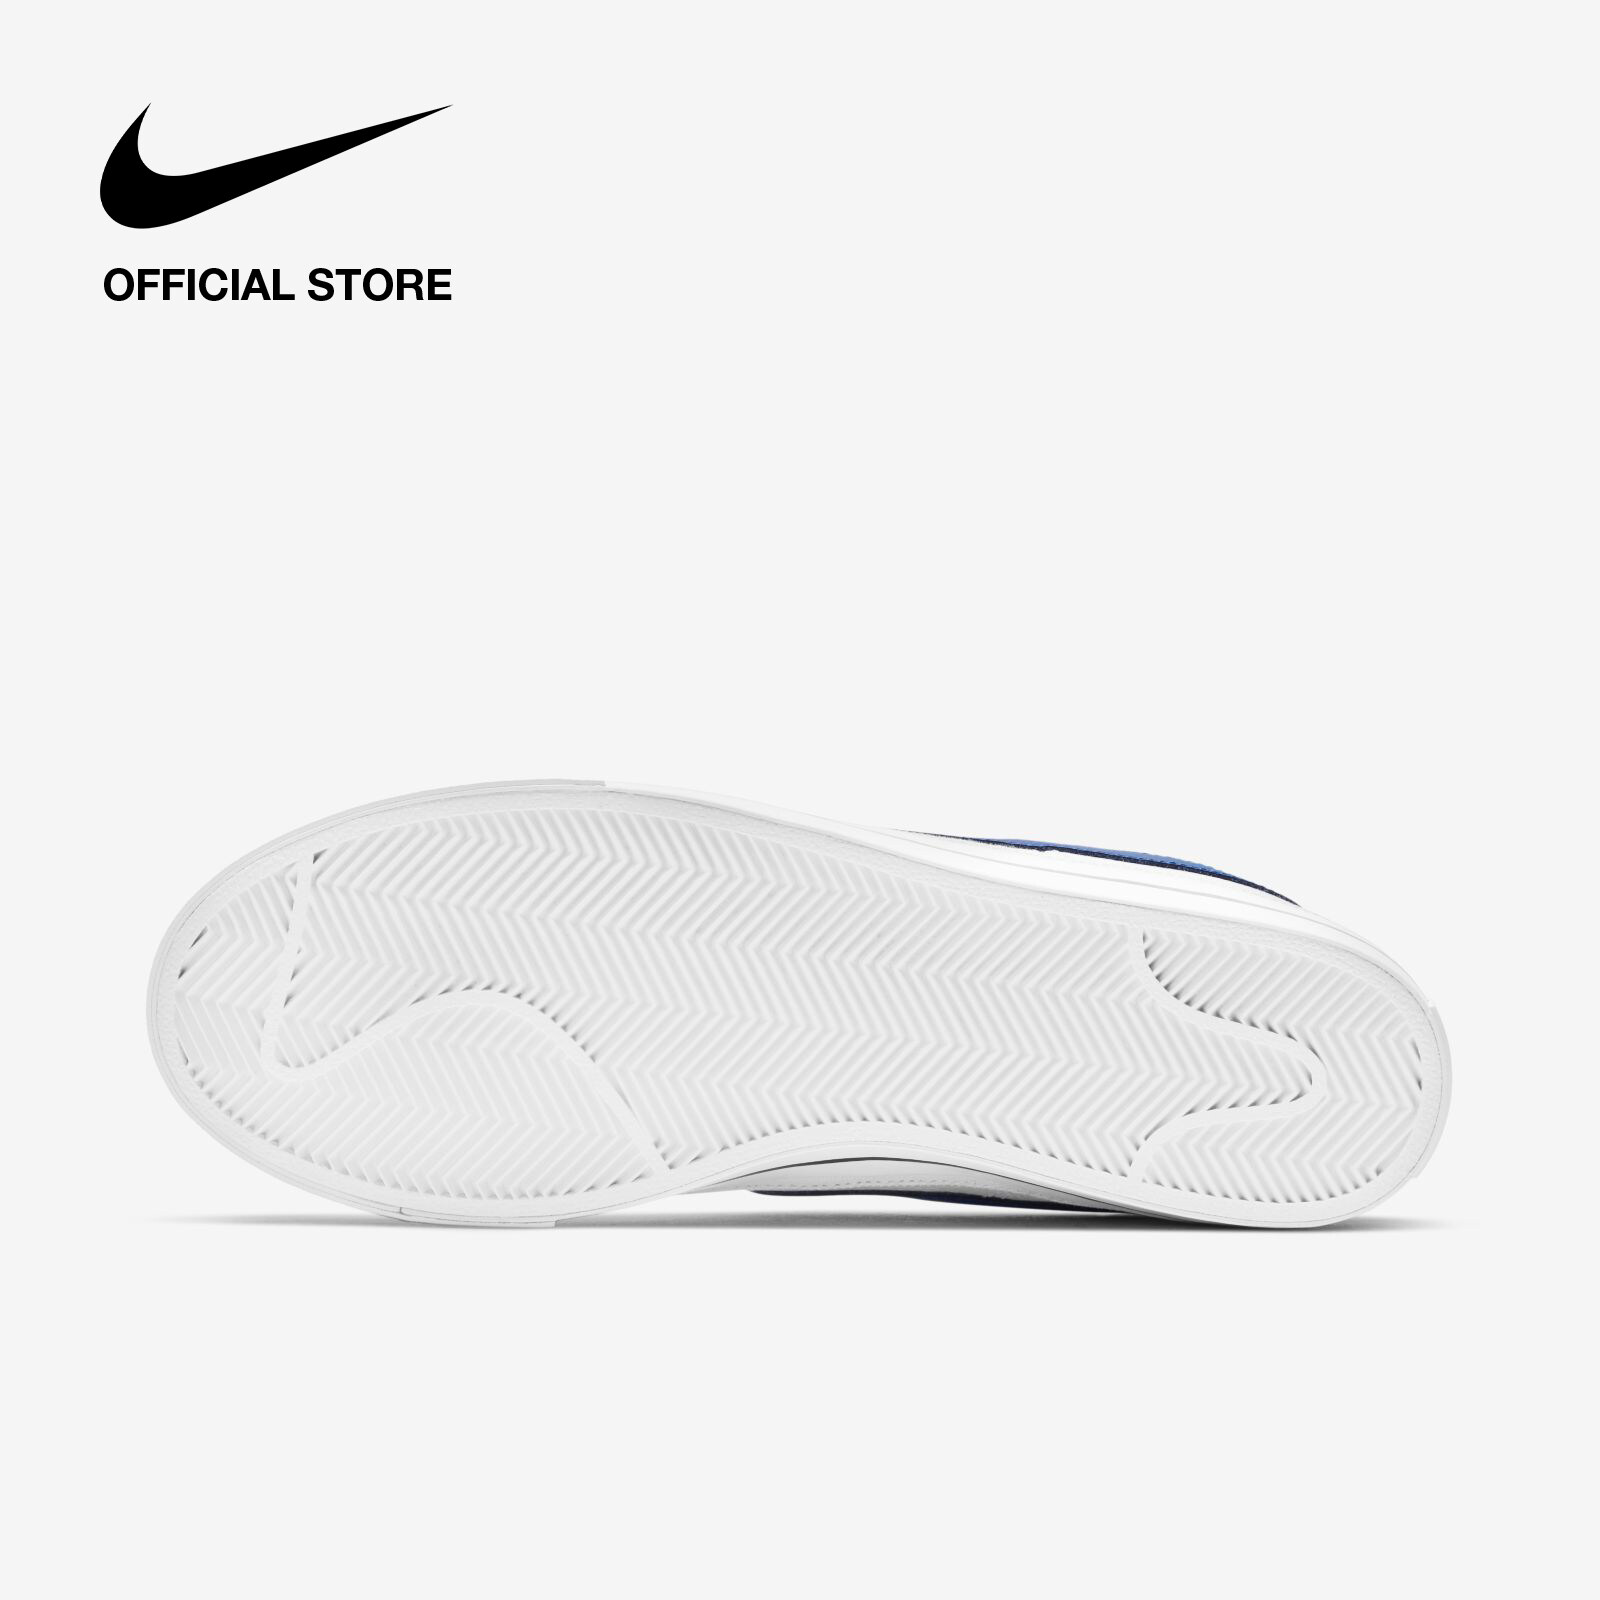 Nike Men's Court Legacy Shoes - White รองเท้าผู้ชาย Nike Court Legacy - สีขาว